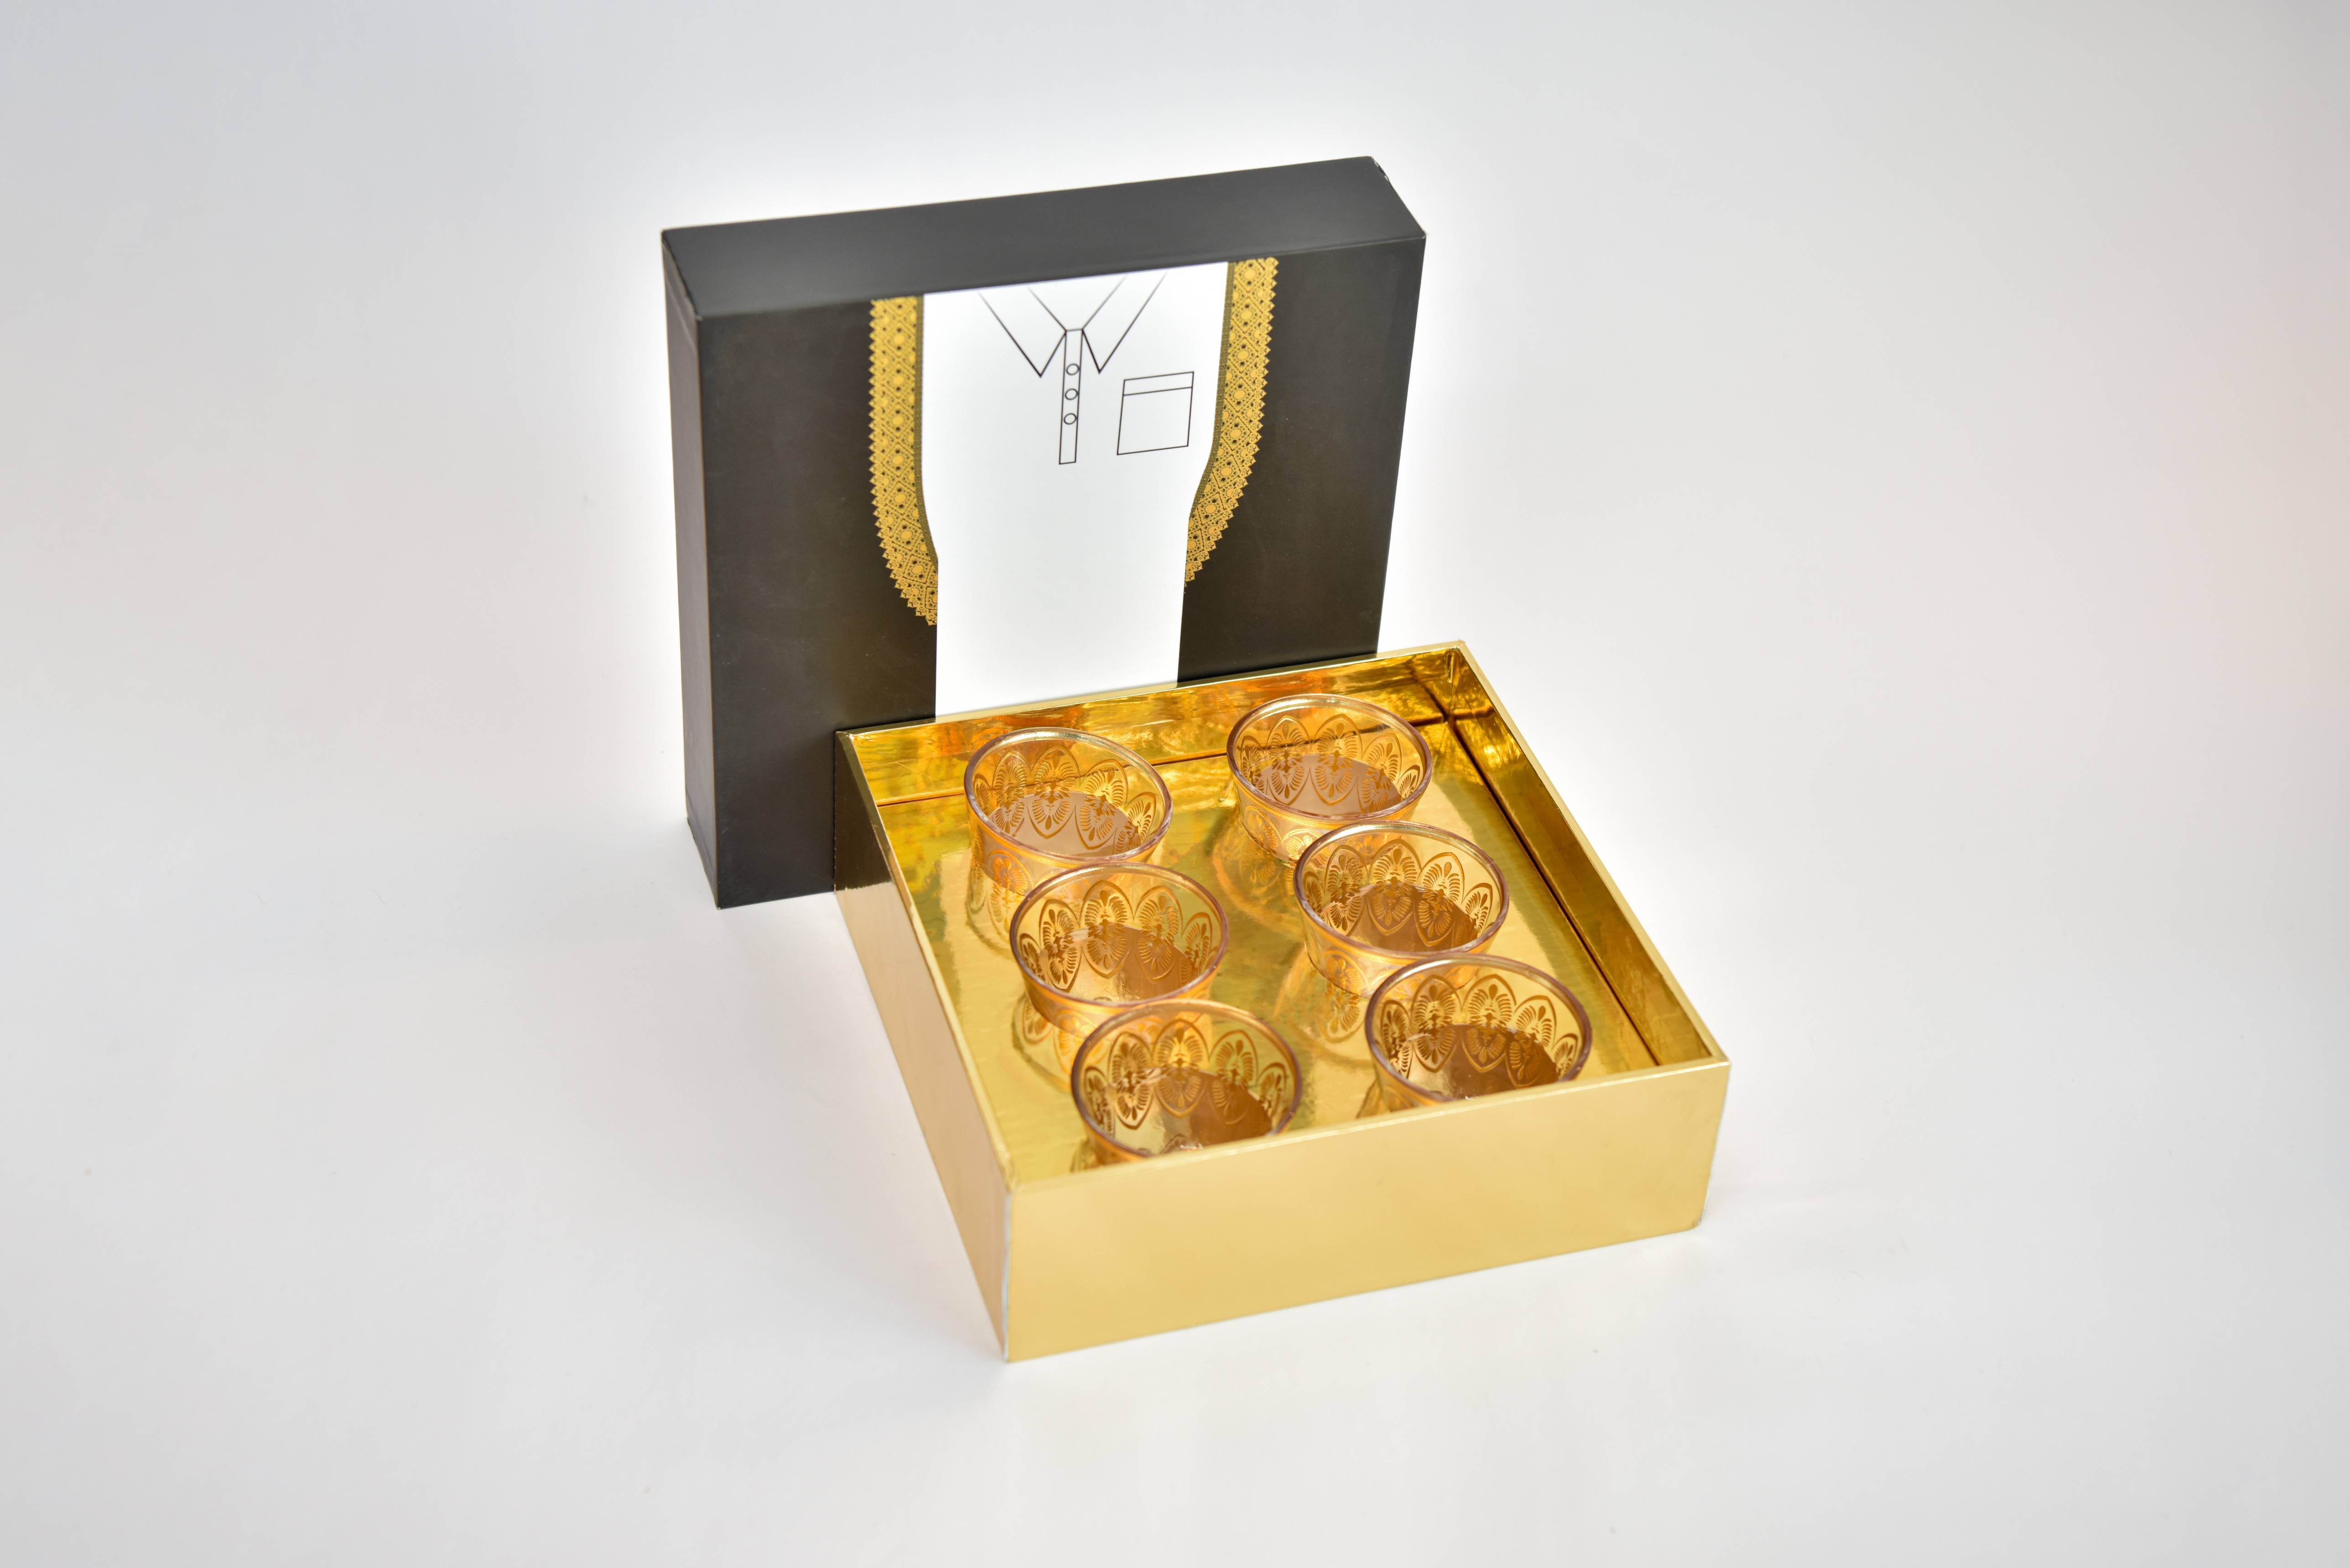 Bisht design gift box, traditional Qatari design- Gifts by fatma